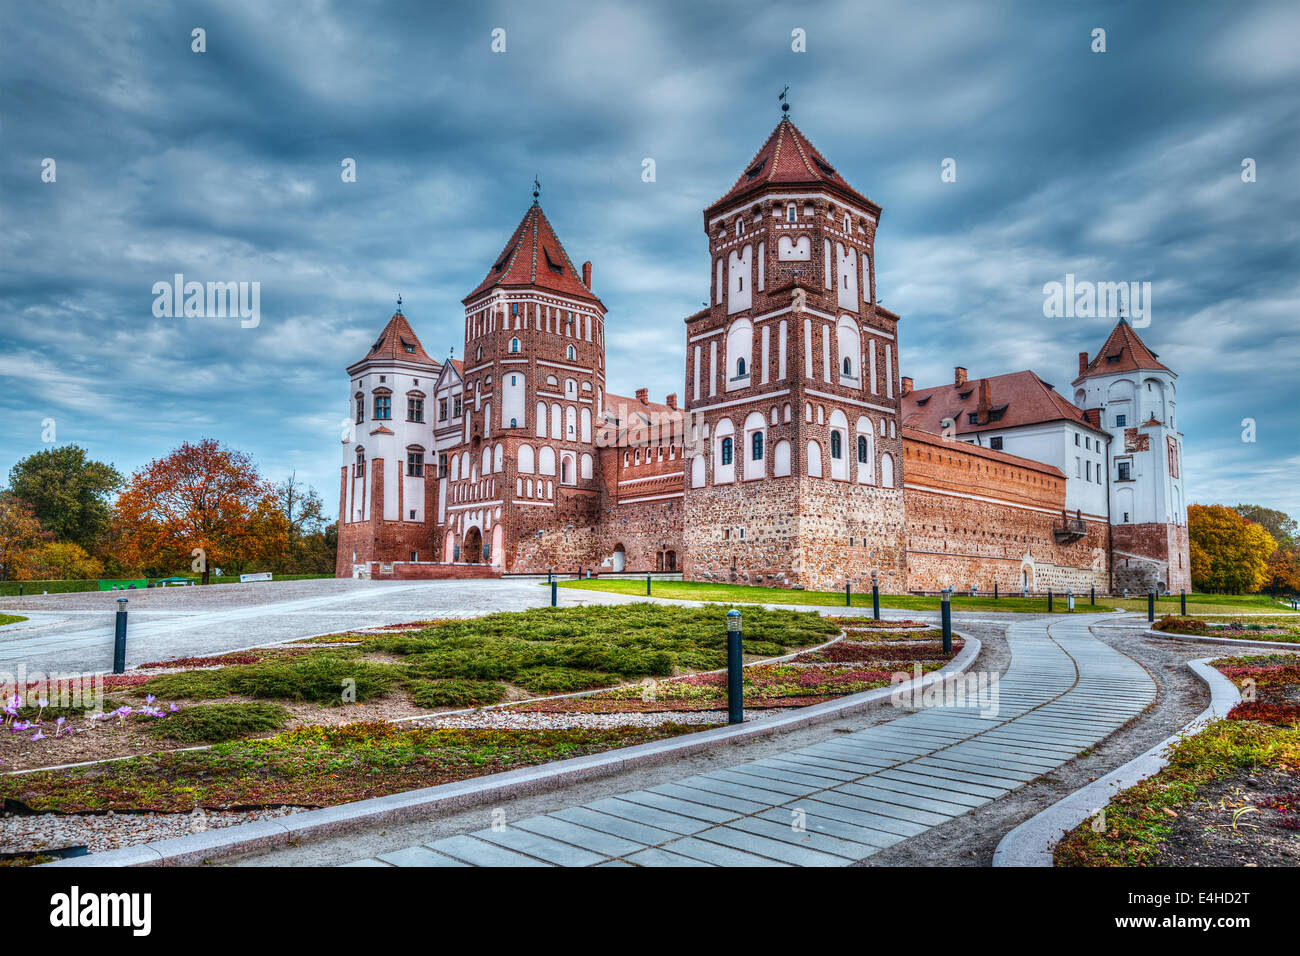 High dynamic range (hdr) image of medieval Mir castle famous landmark in town Mir, Belarus Stock Photo